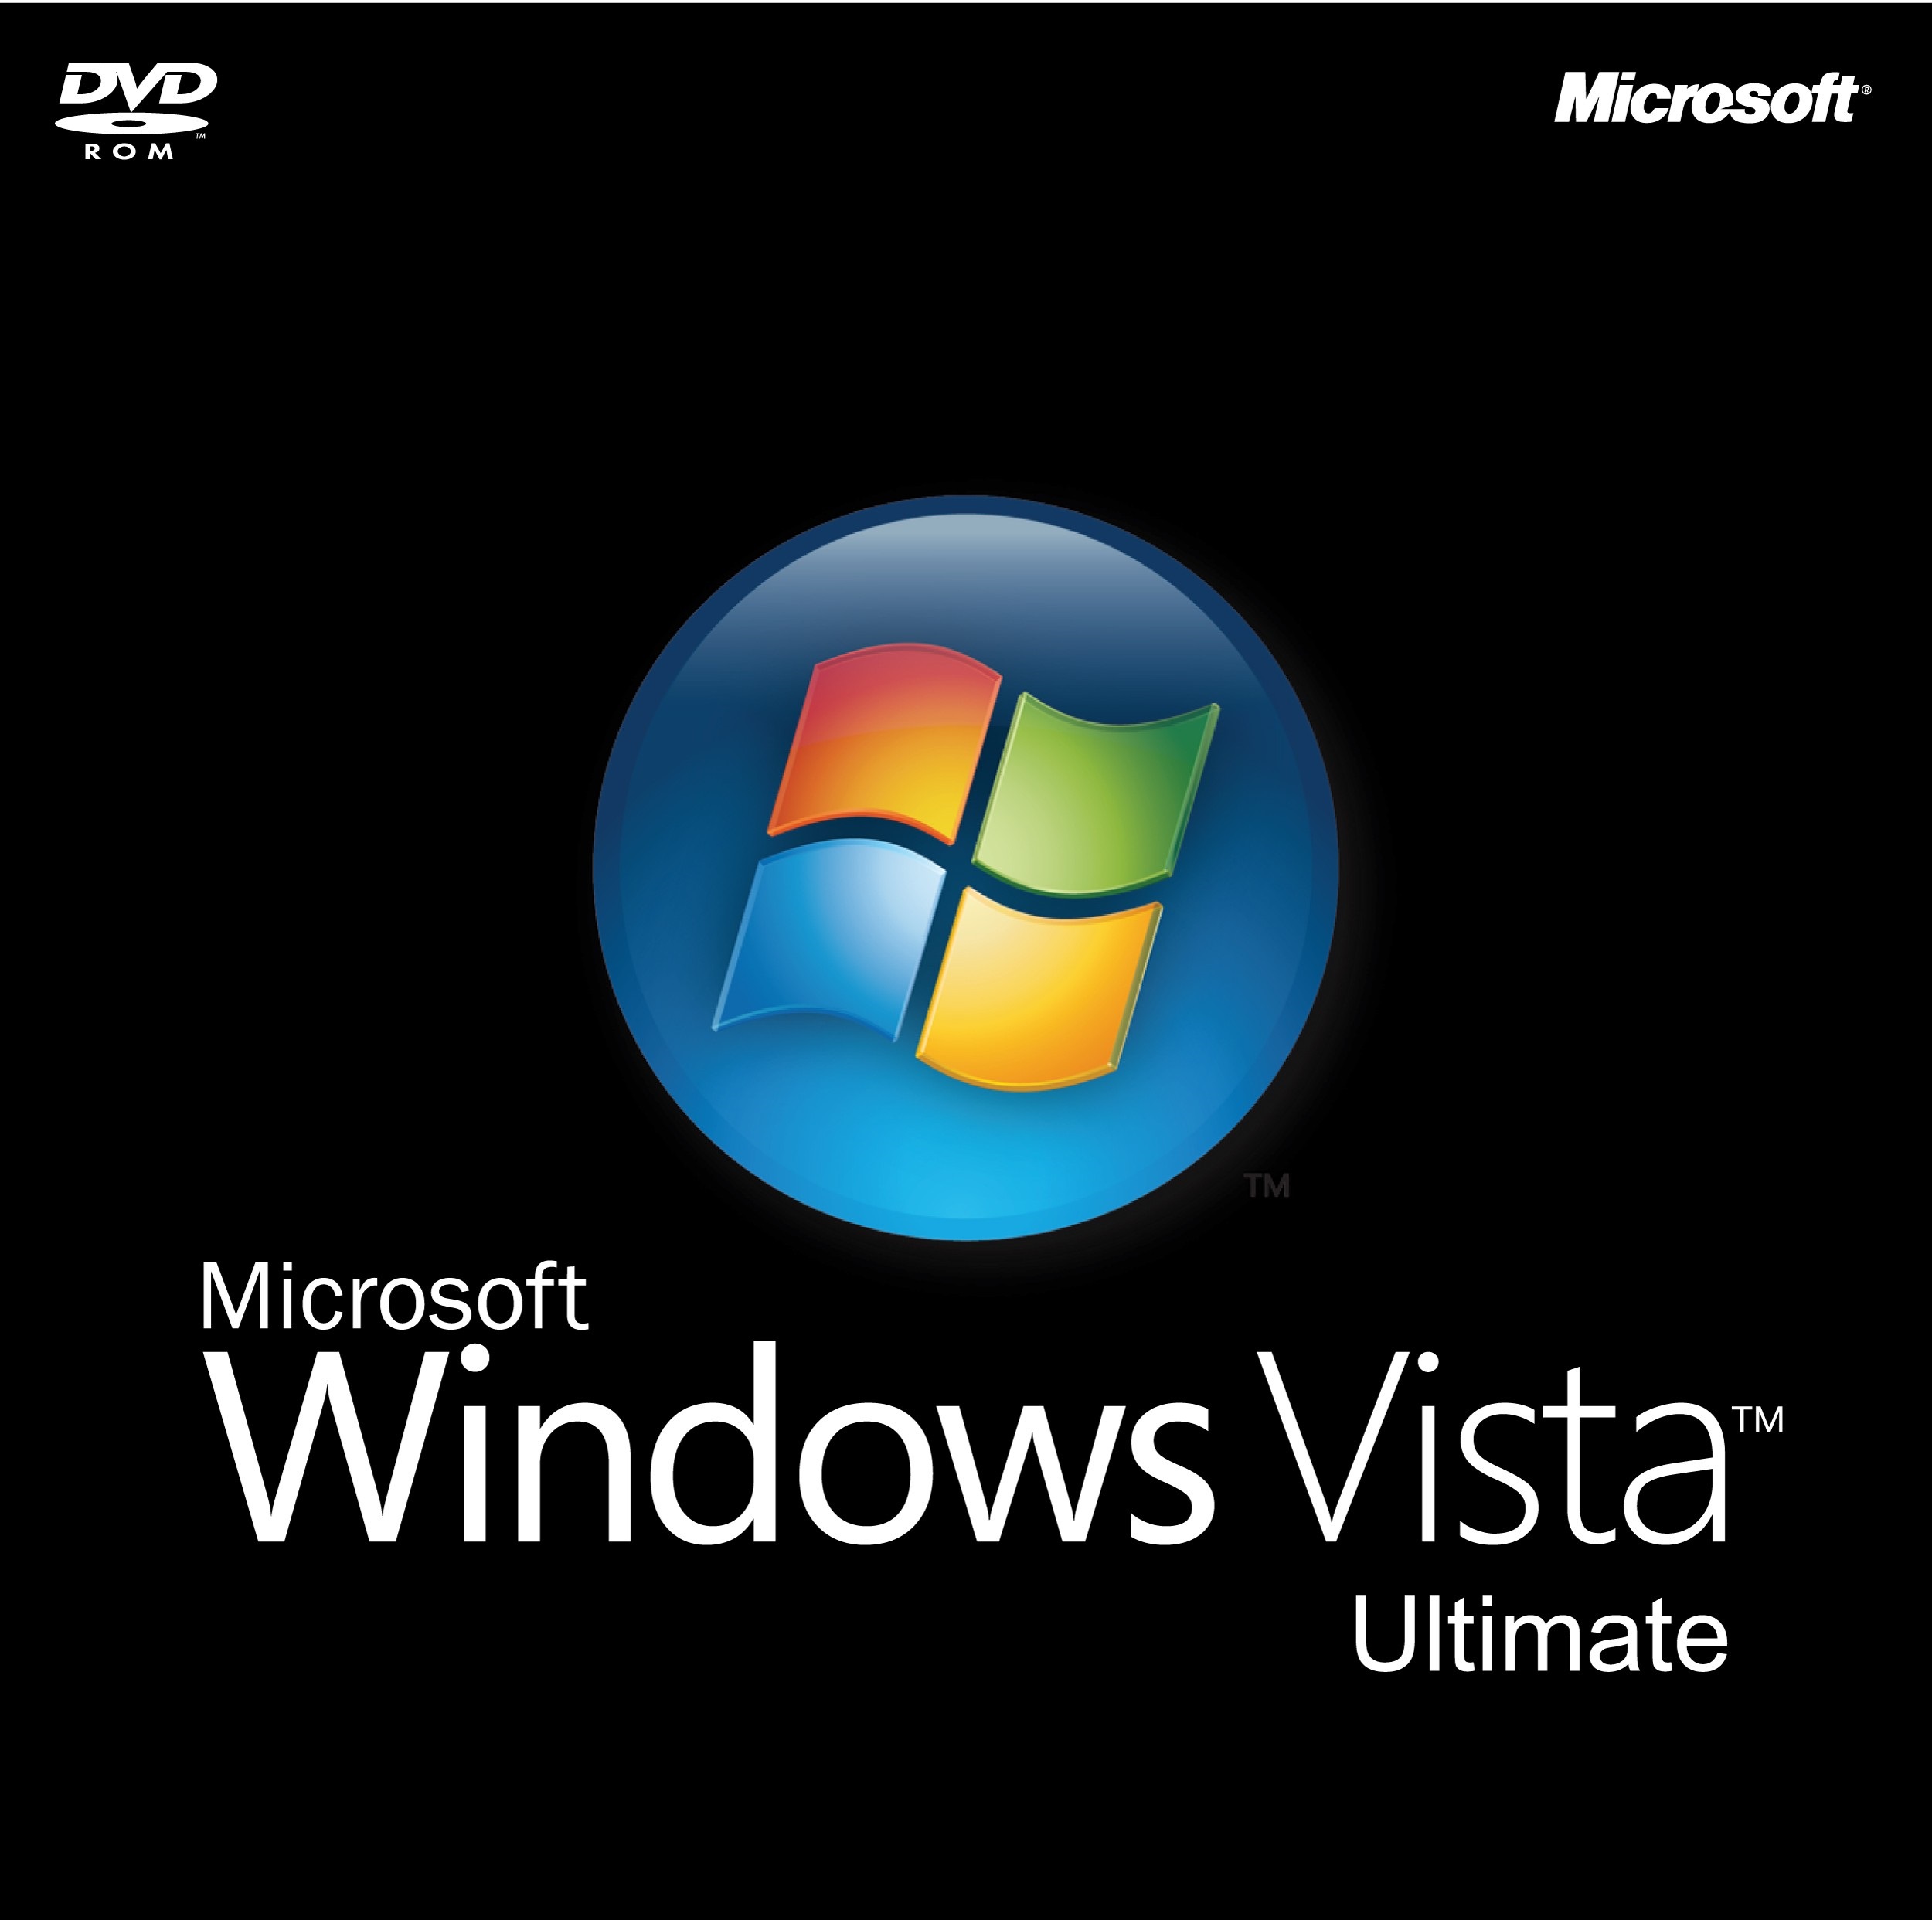 Download Windows 10 Disc Image ISO File - microsoftcom